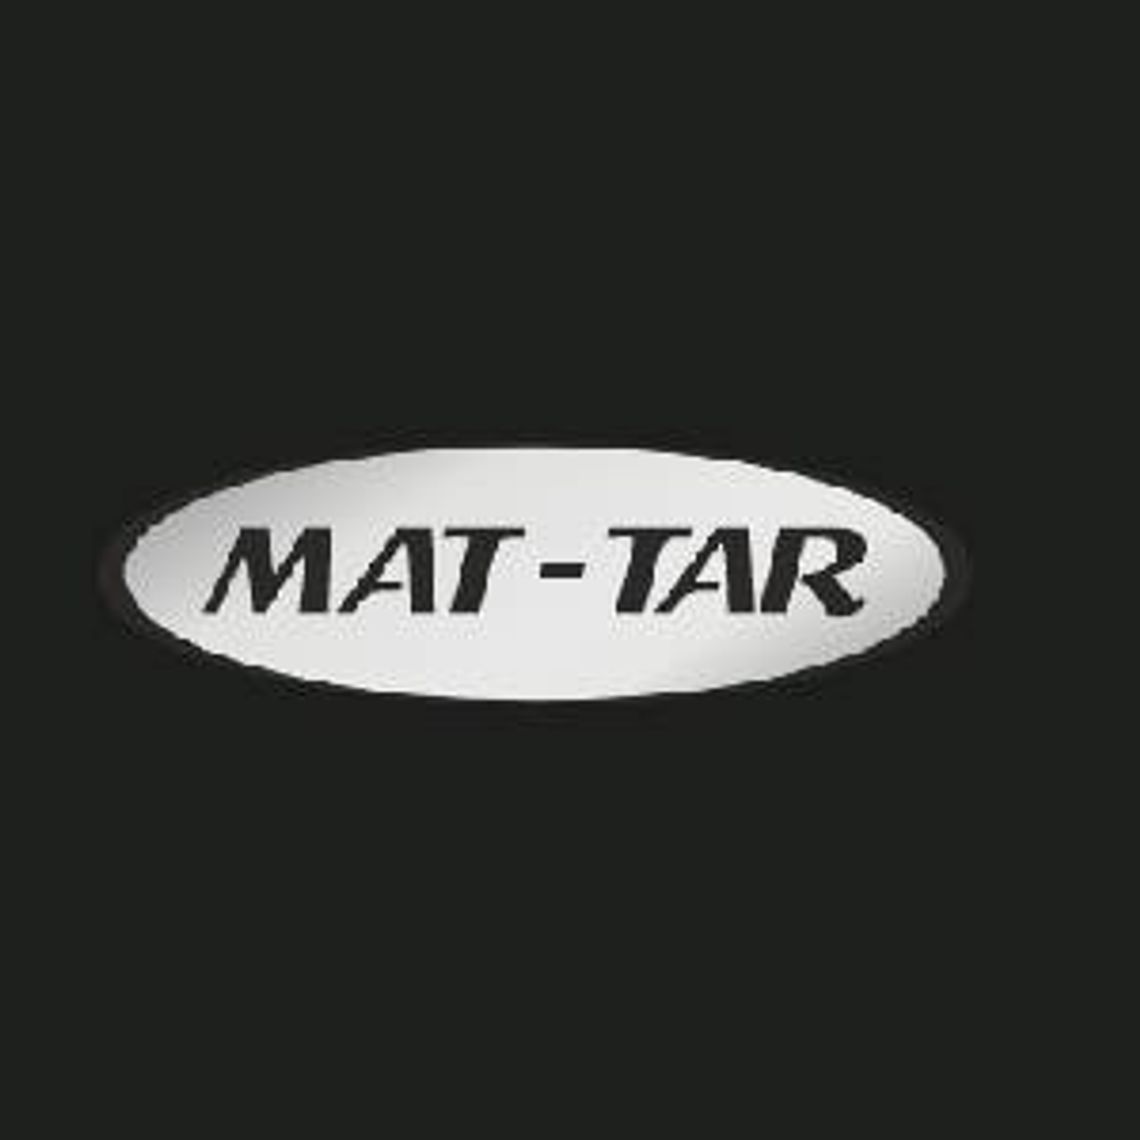 Stoły dębowe producent - Mat-tar